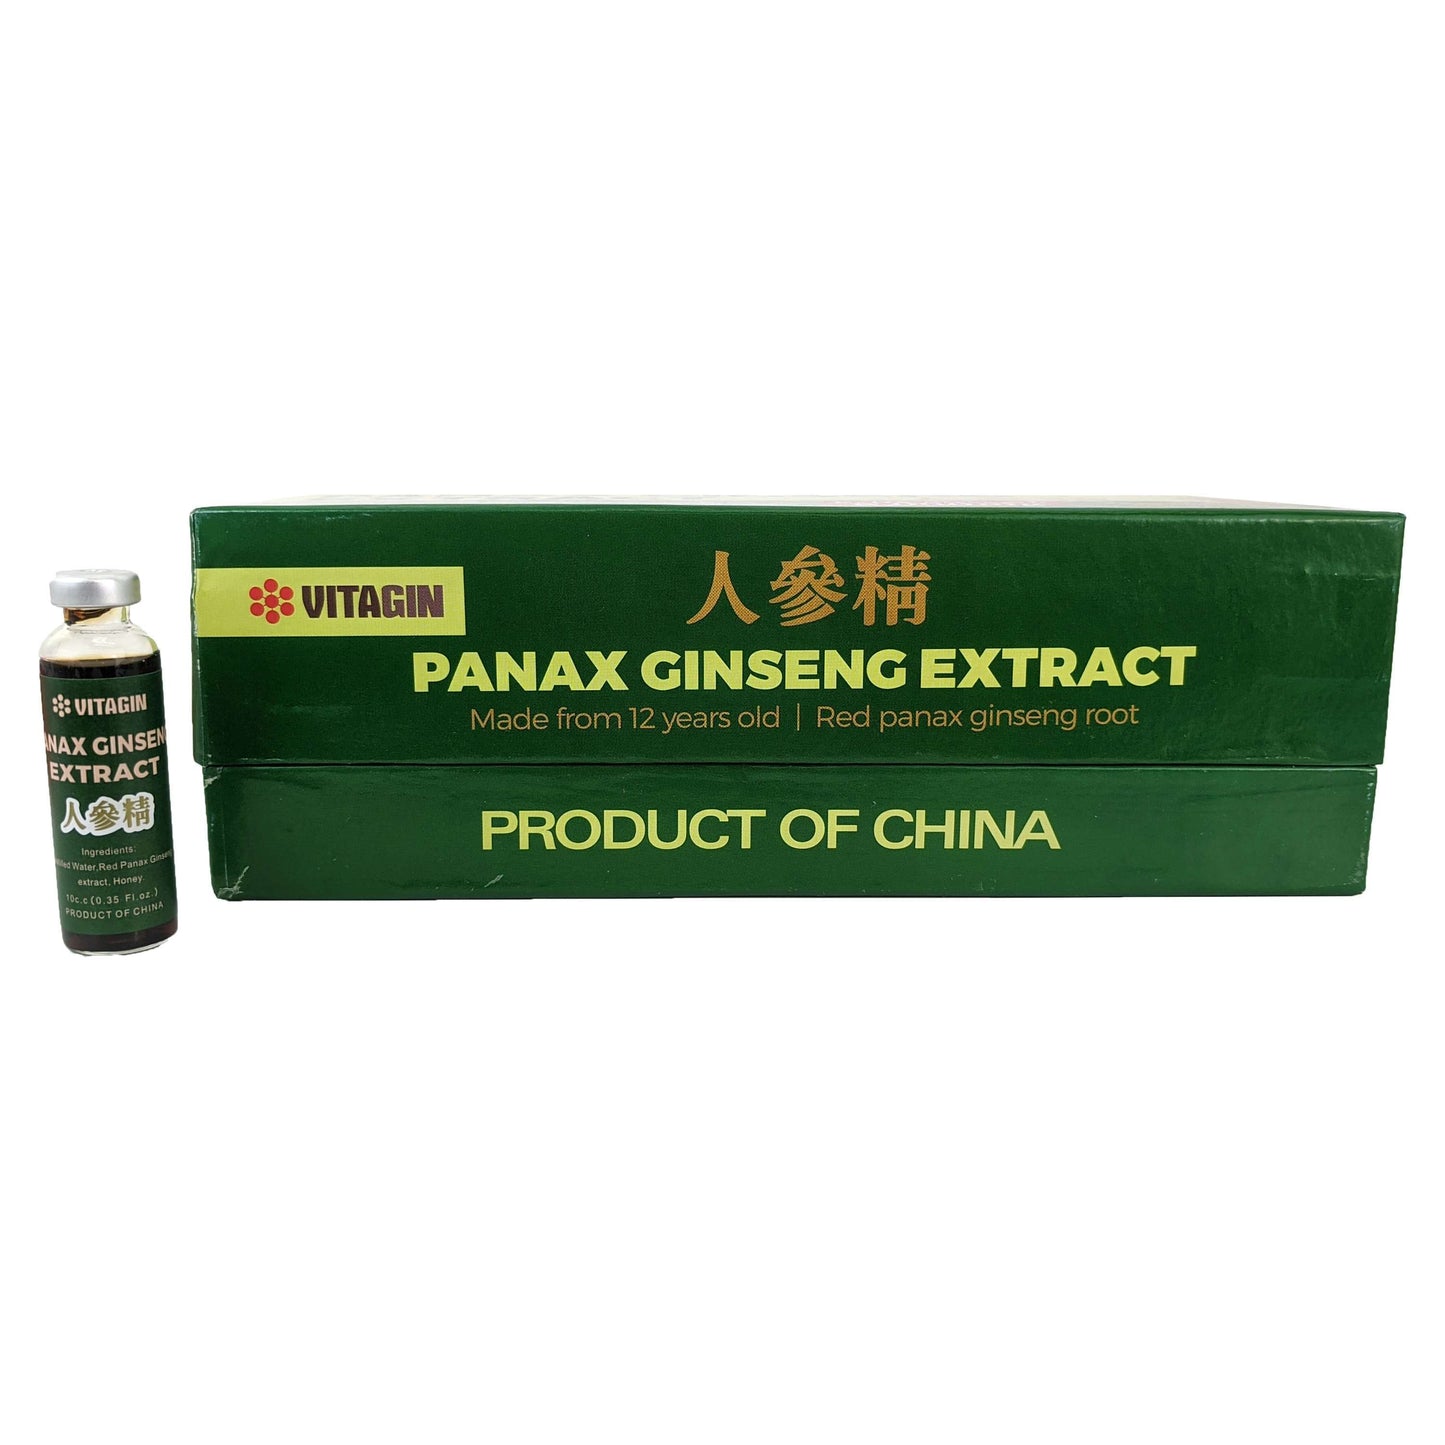 Vitagin Premium Panax Ginseng Extract Drink, Box of 30x 10ml Bottles